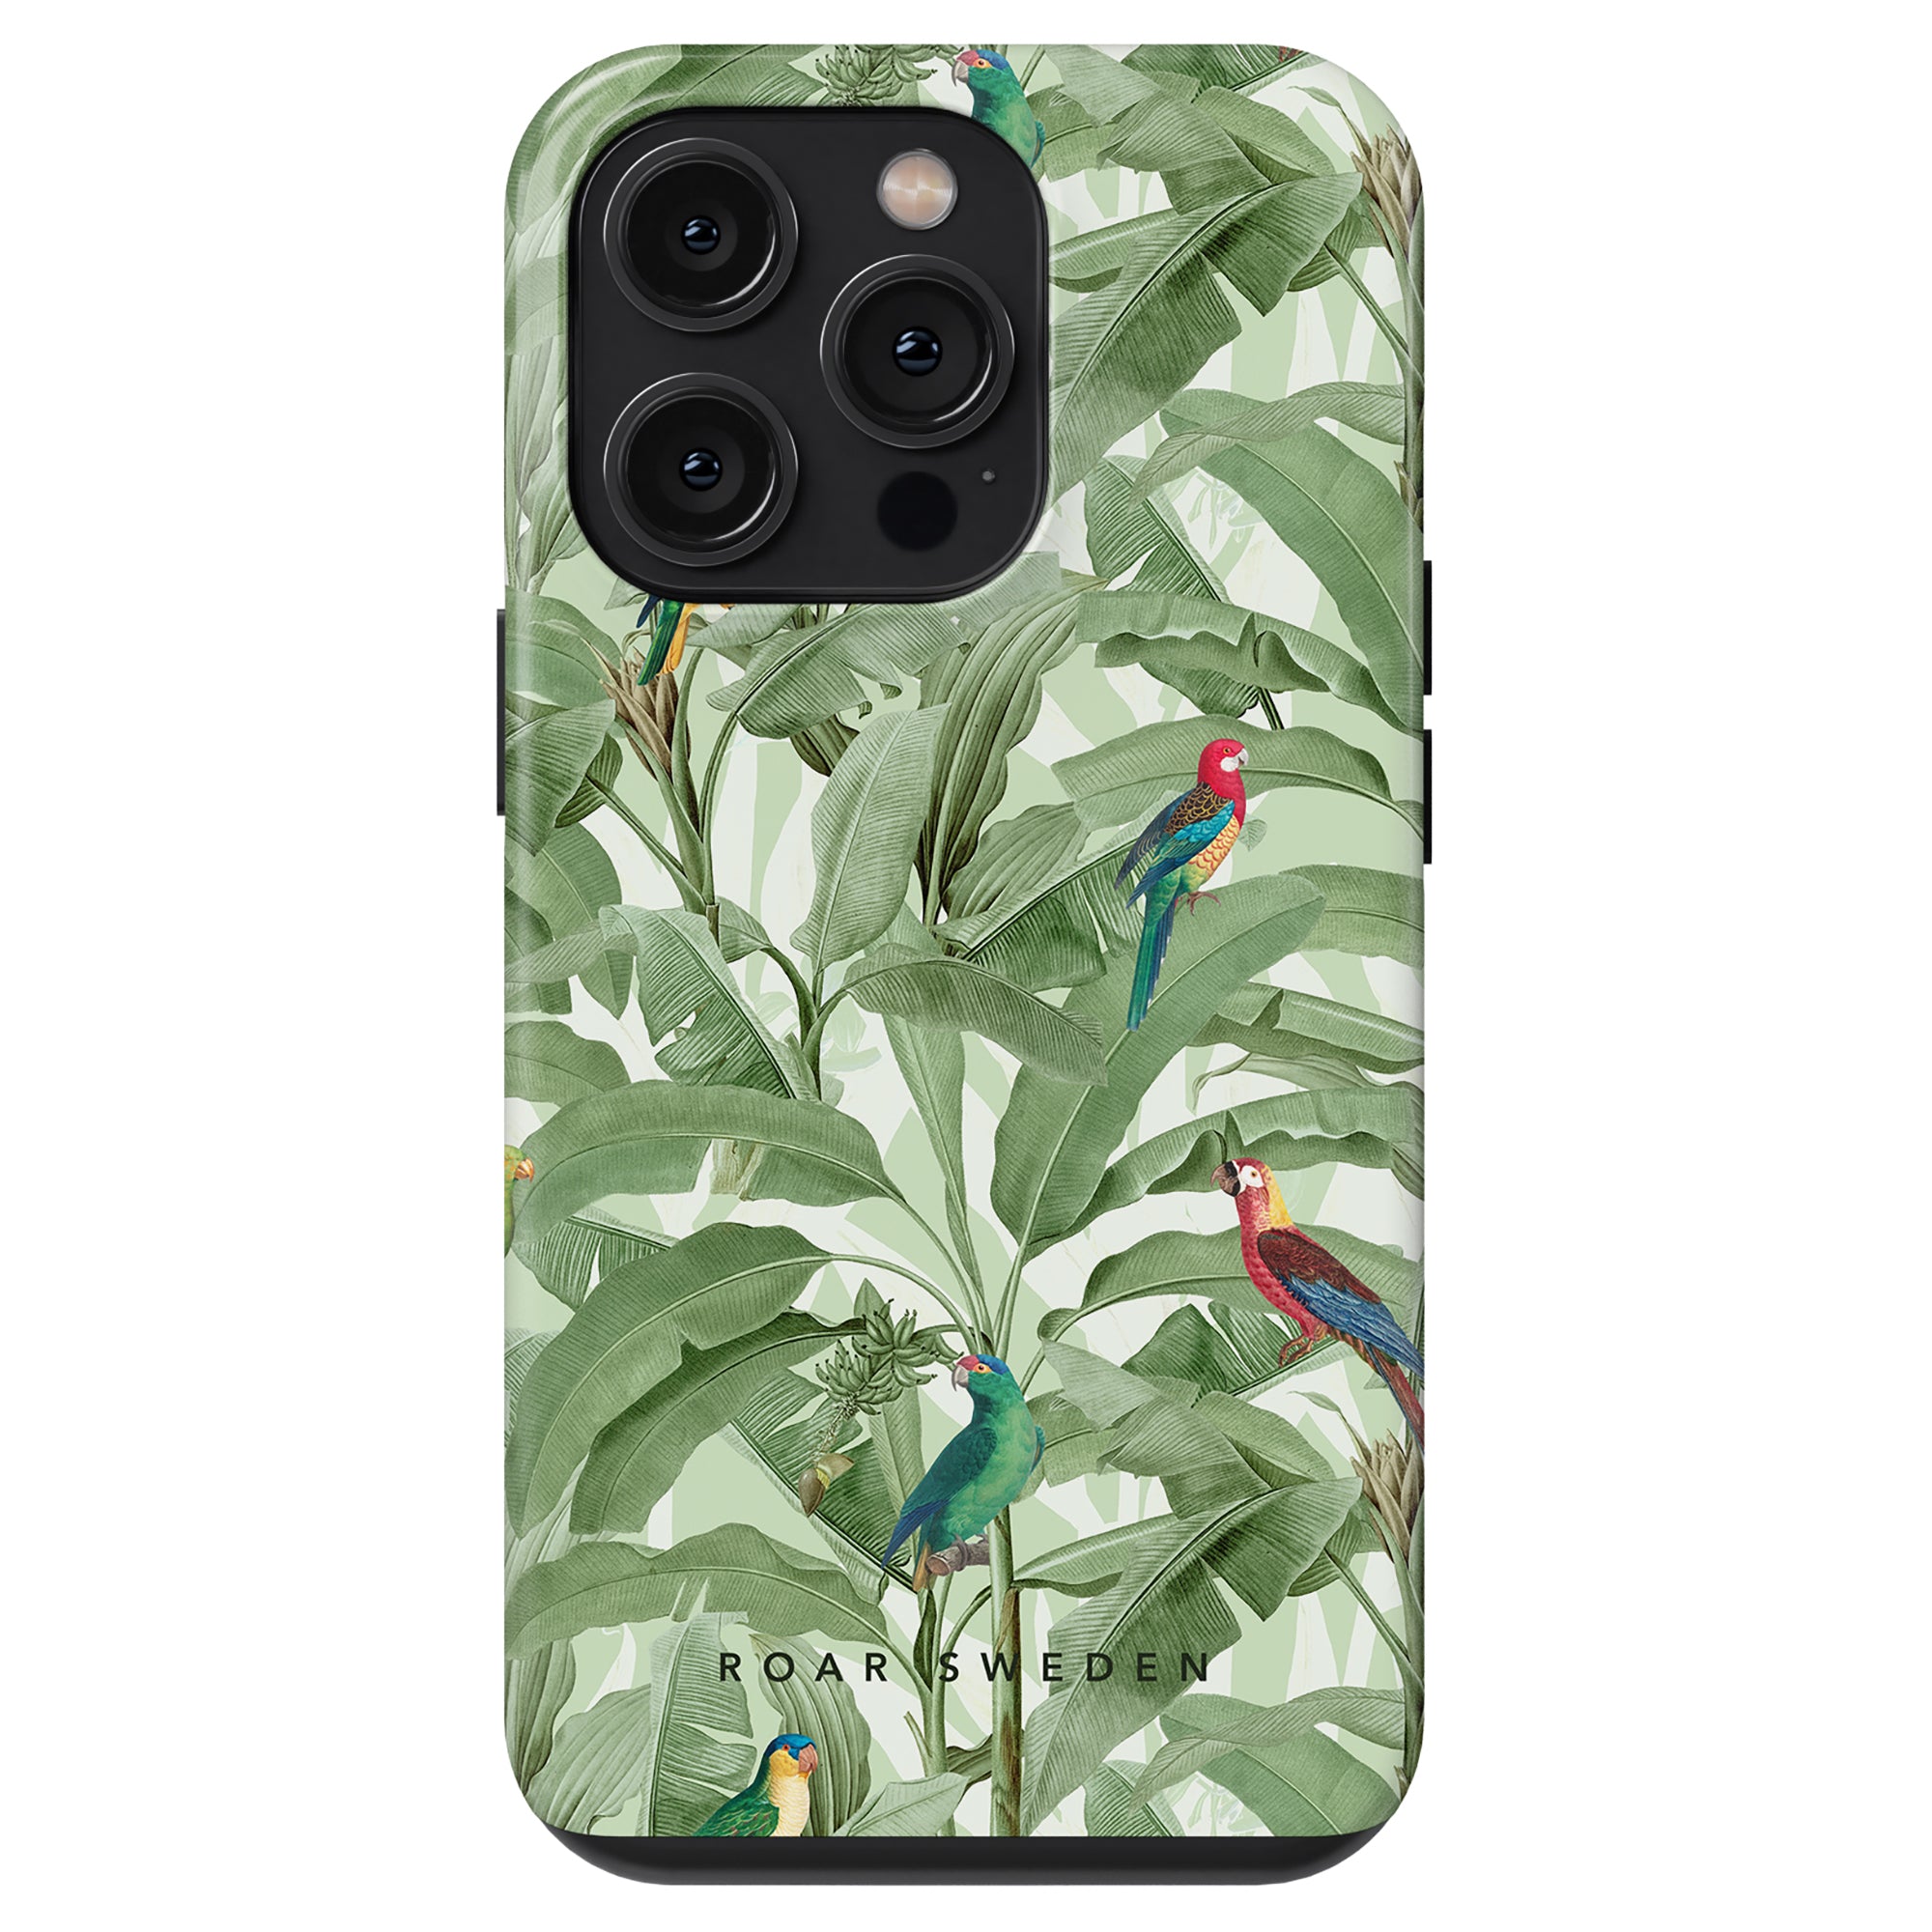 Smartphone with a Parrot Paradise tough case design.